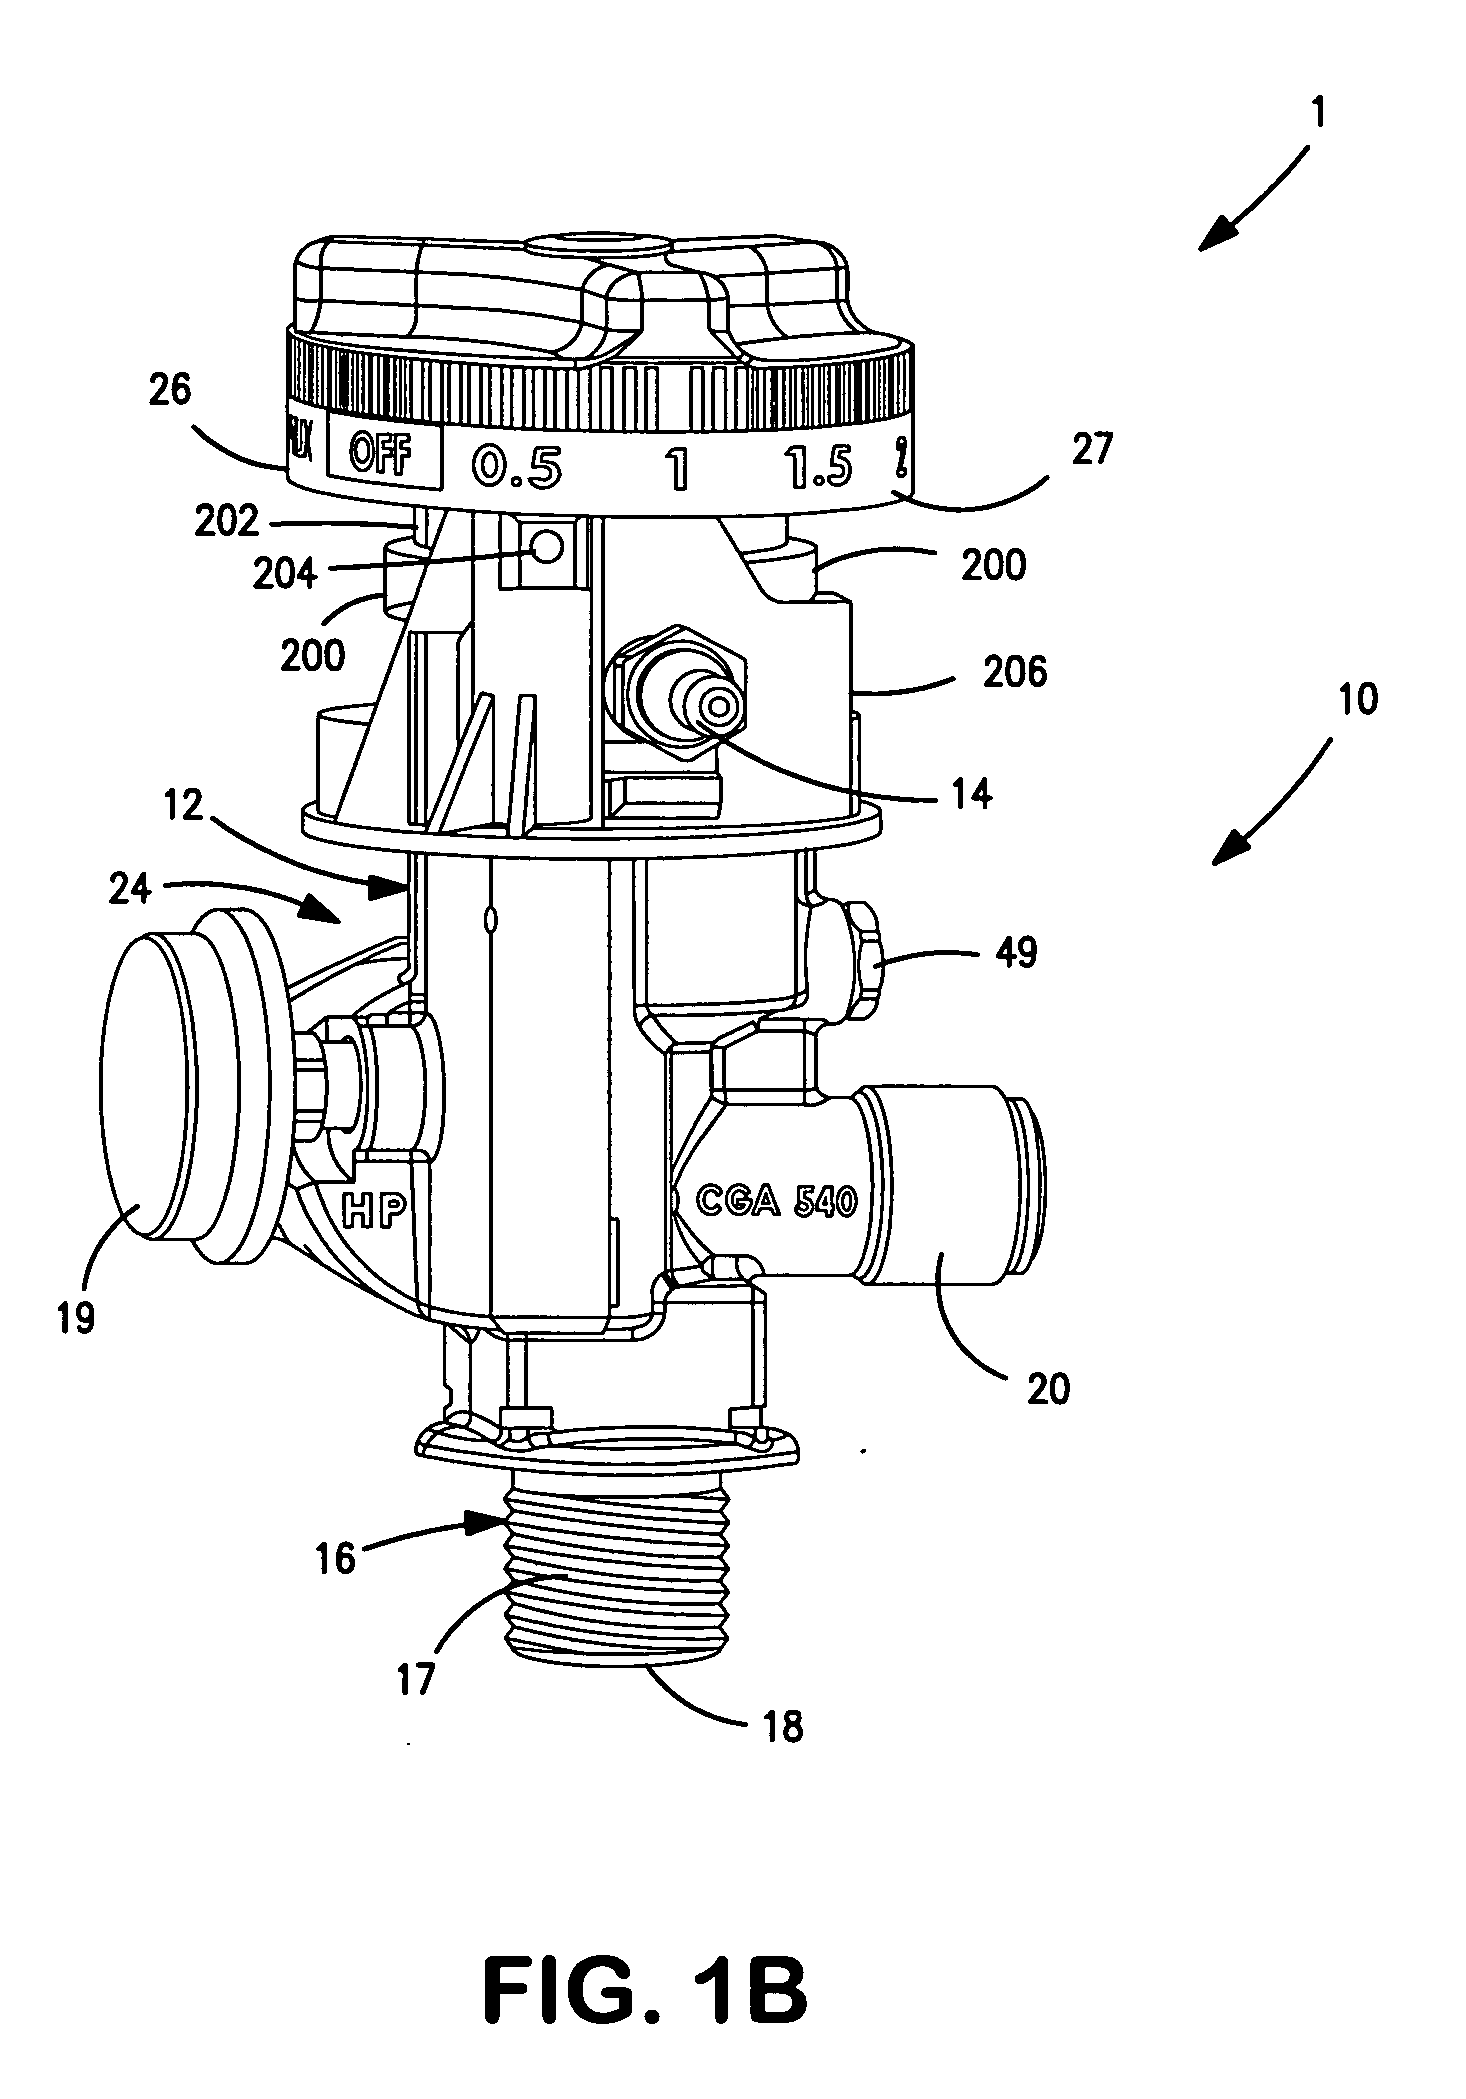 Gas cyclinder dispensing valve